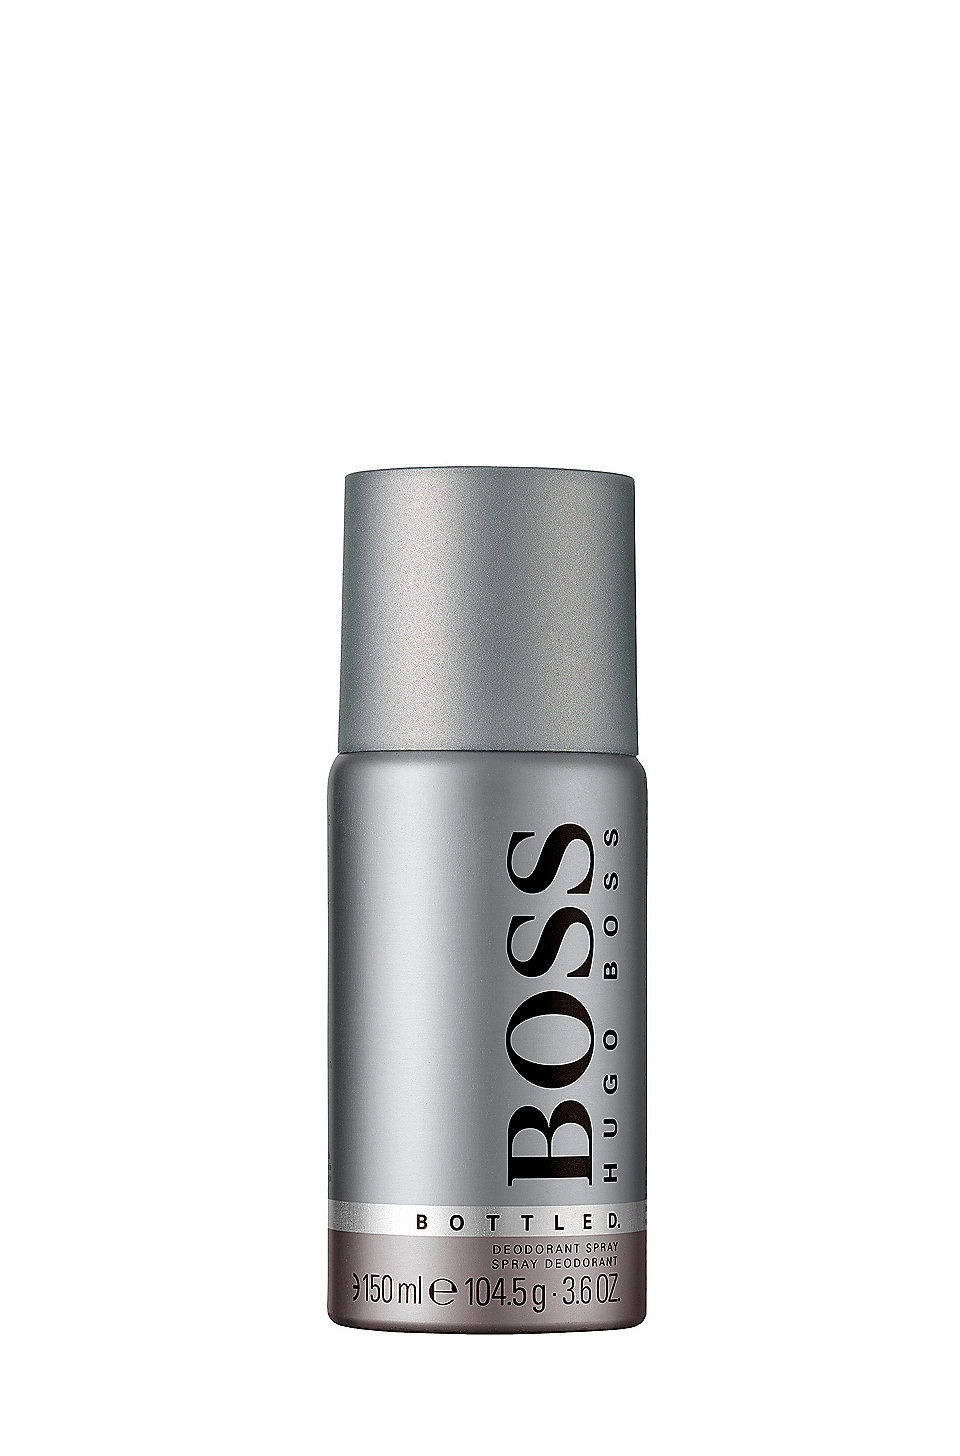 Om lidenskab træ BOSS - BOSS Bottled deodorant spray 150ml